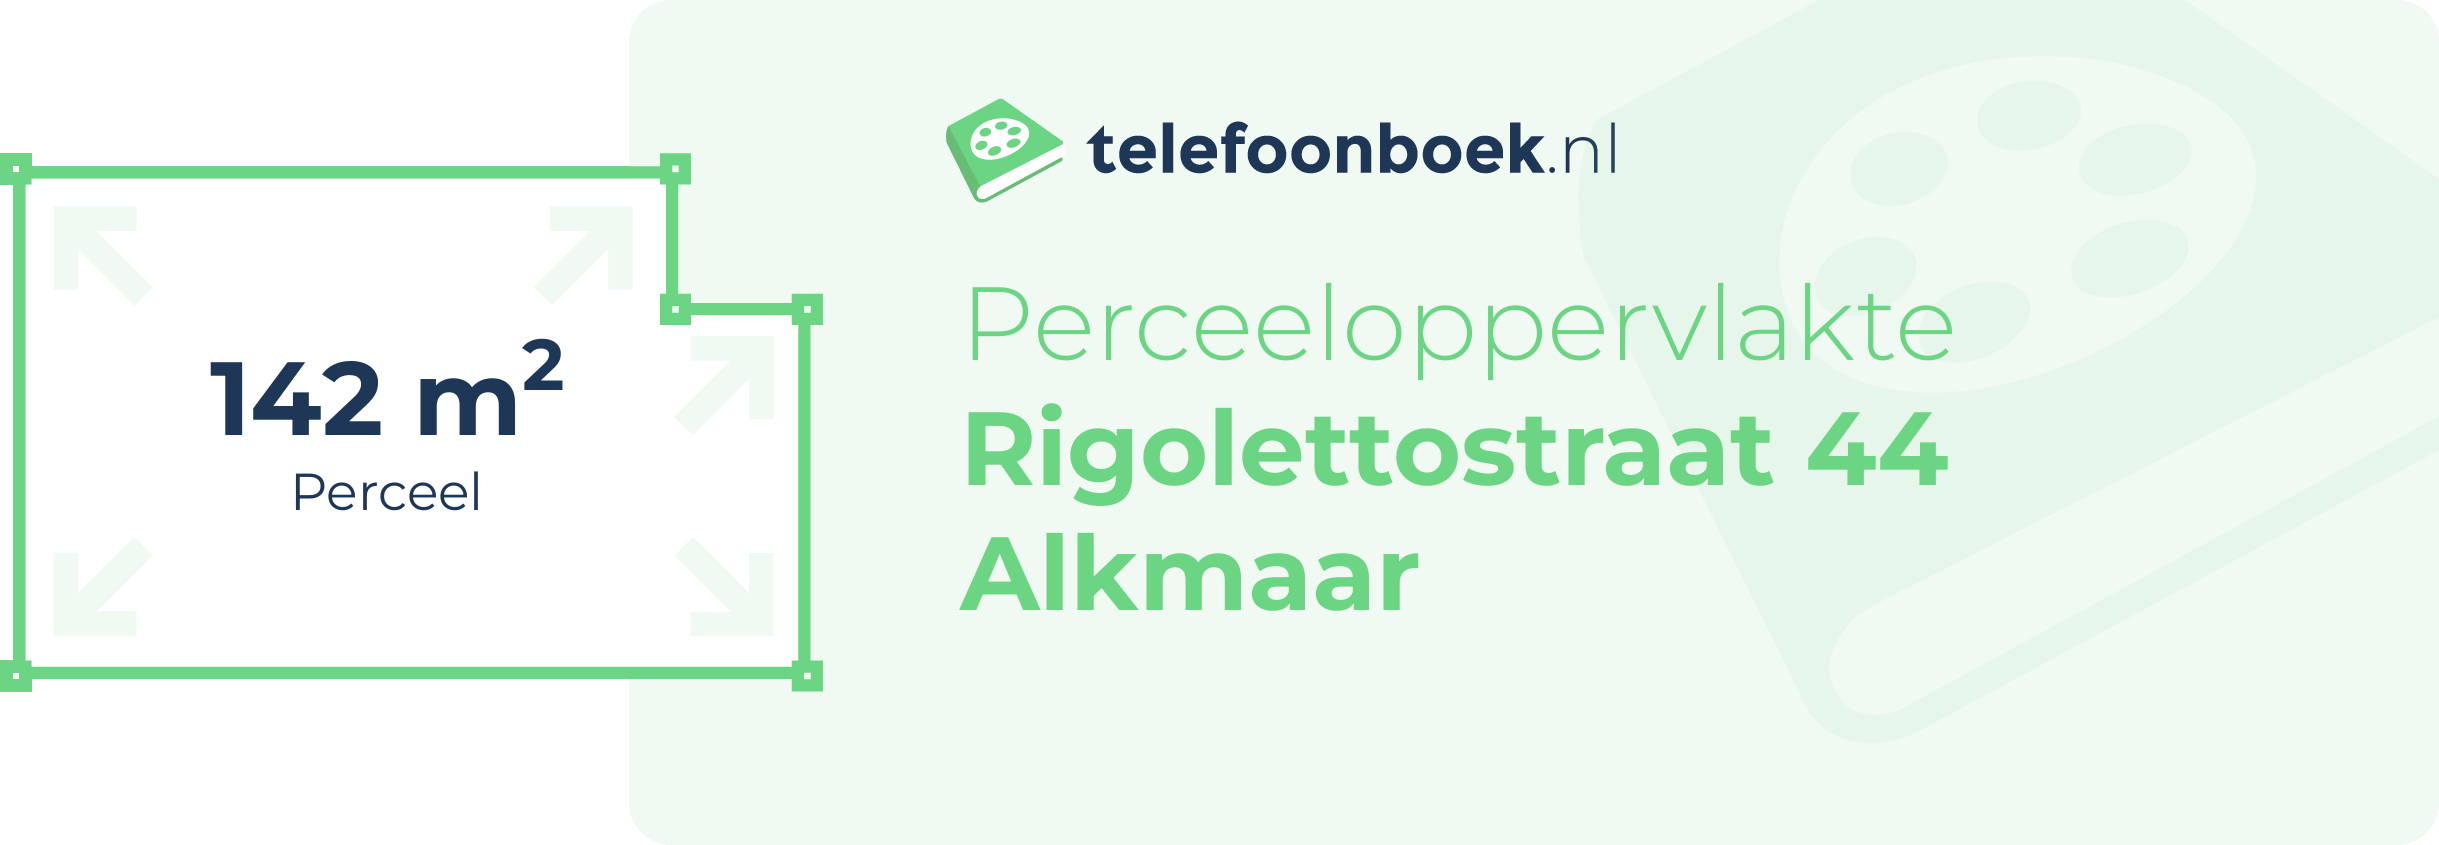 Perceeloppervlakte Rigolettostraat 44 Alkmaar